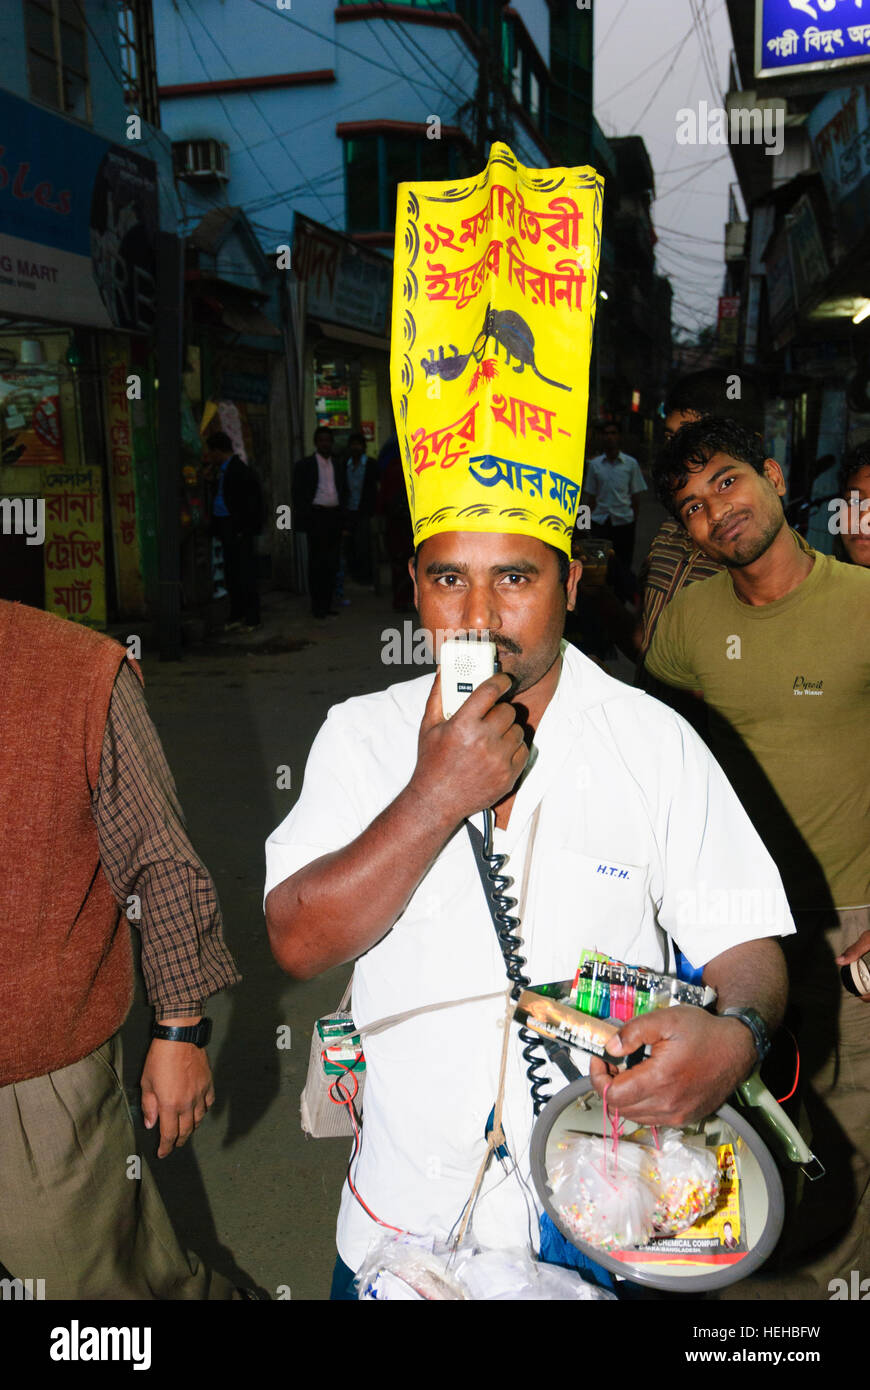 Barisal: Verkäufer der Ratte zu vergiften, Barisal Division, Bangladesch Stockfoto